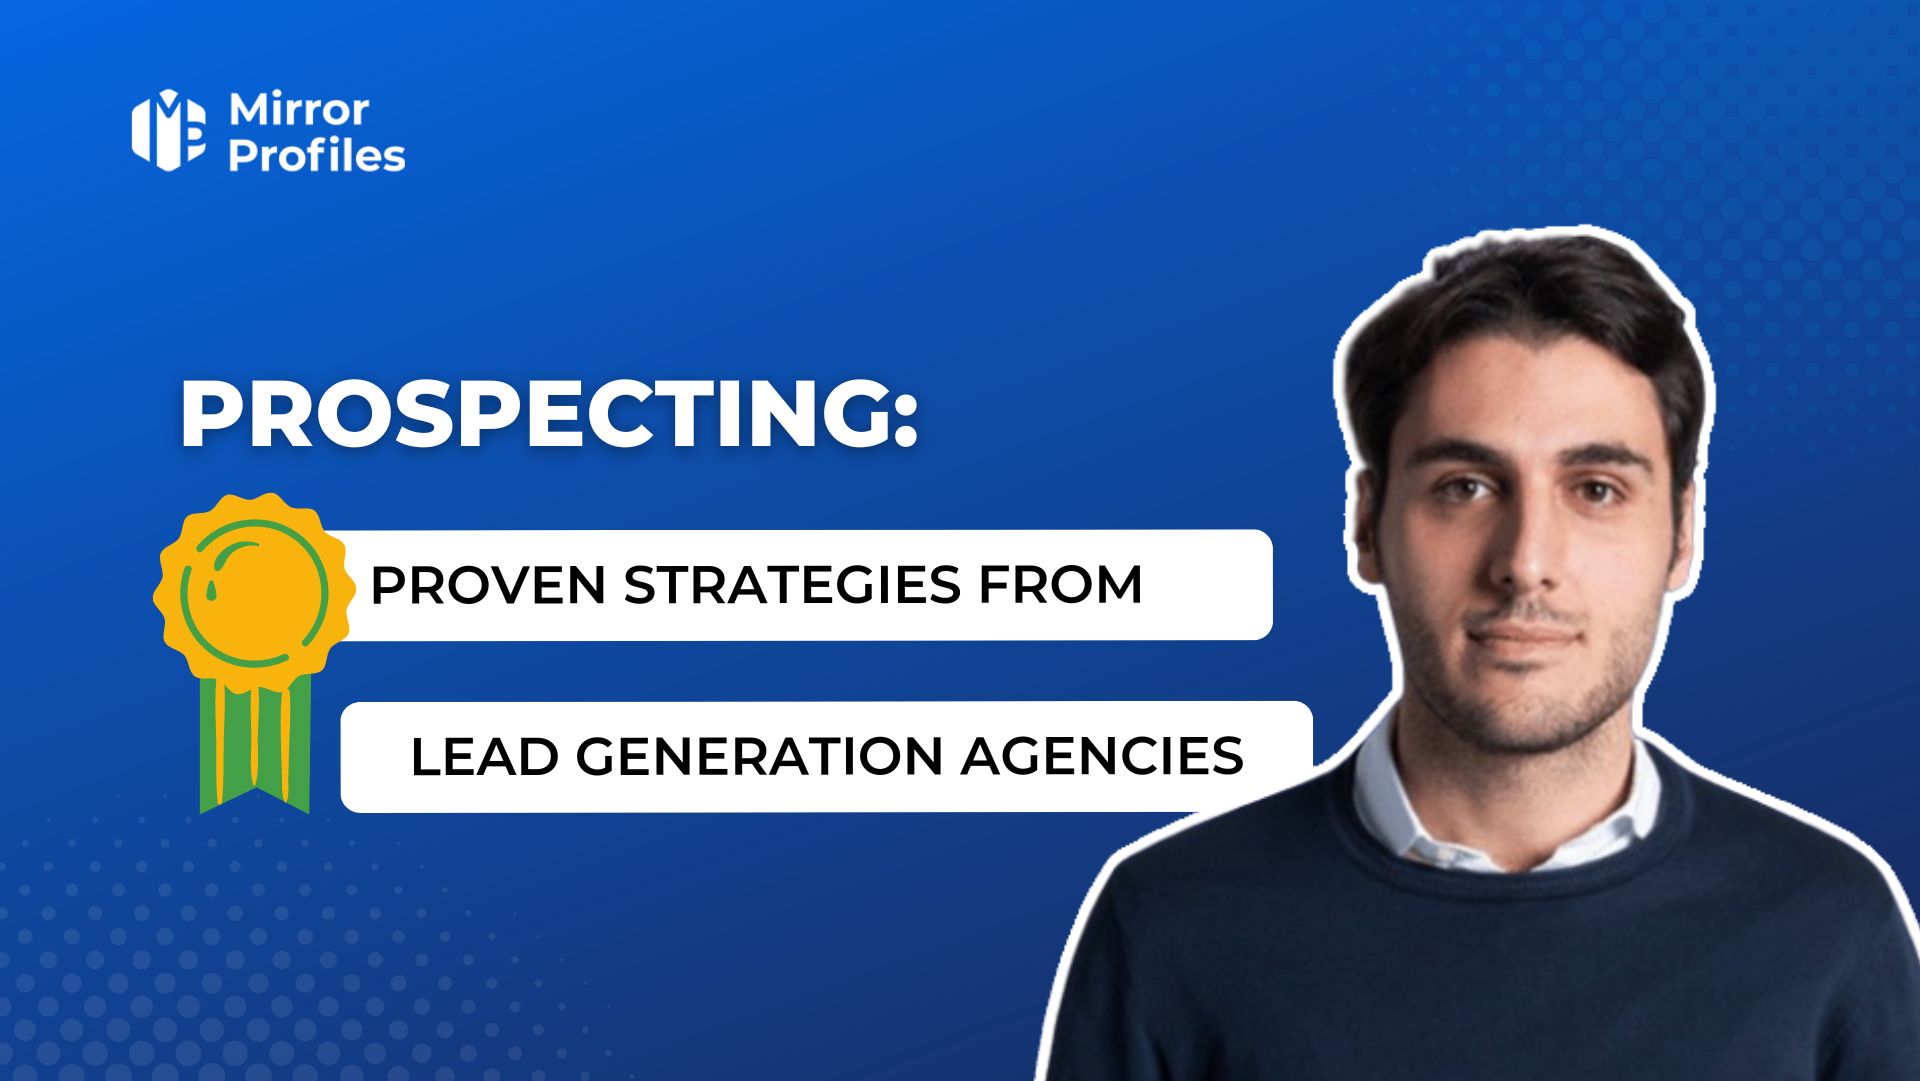 Proven prospecting strategies from B2B lead generation agencies